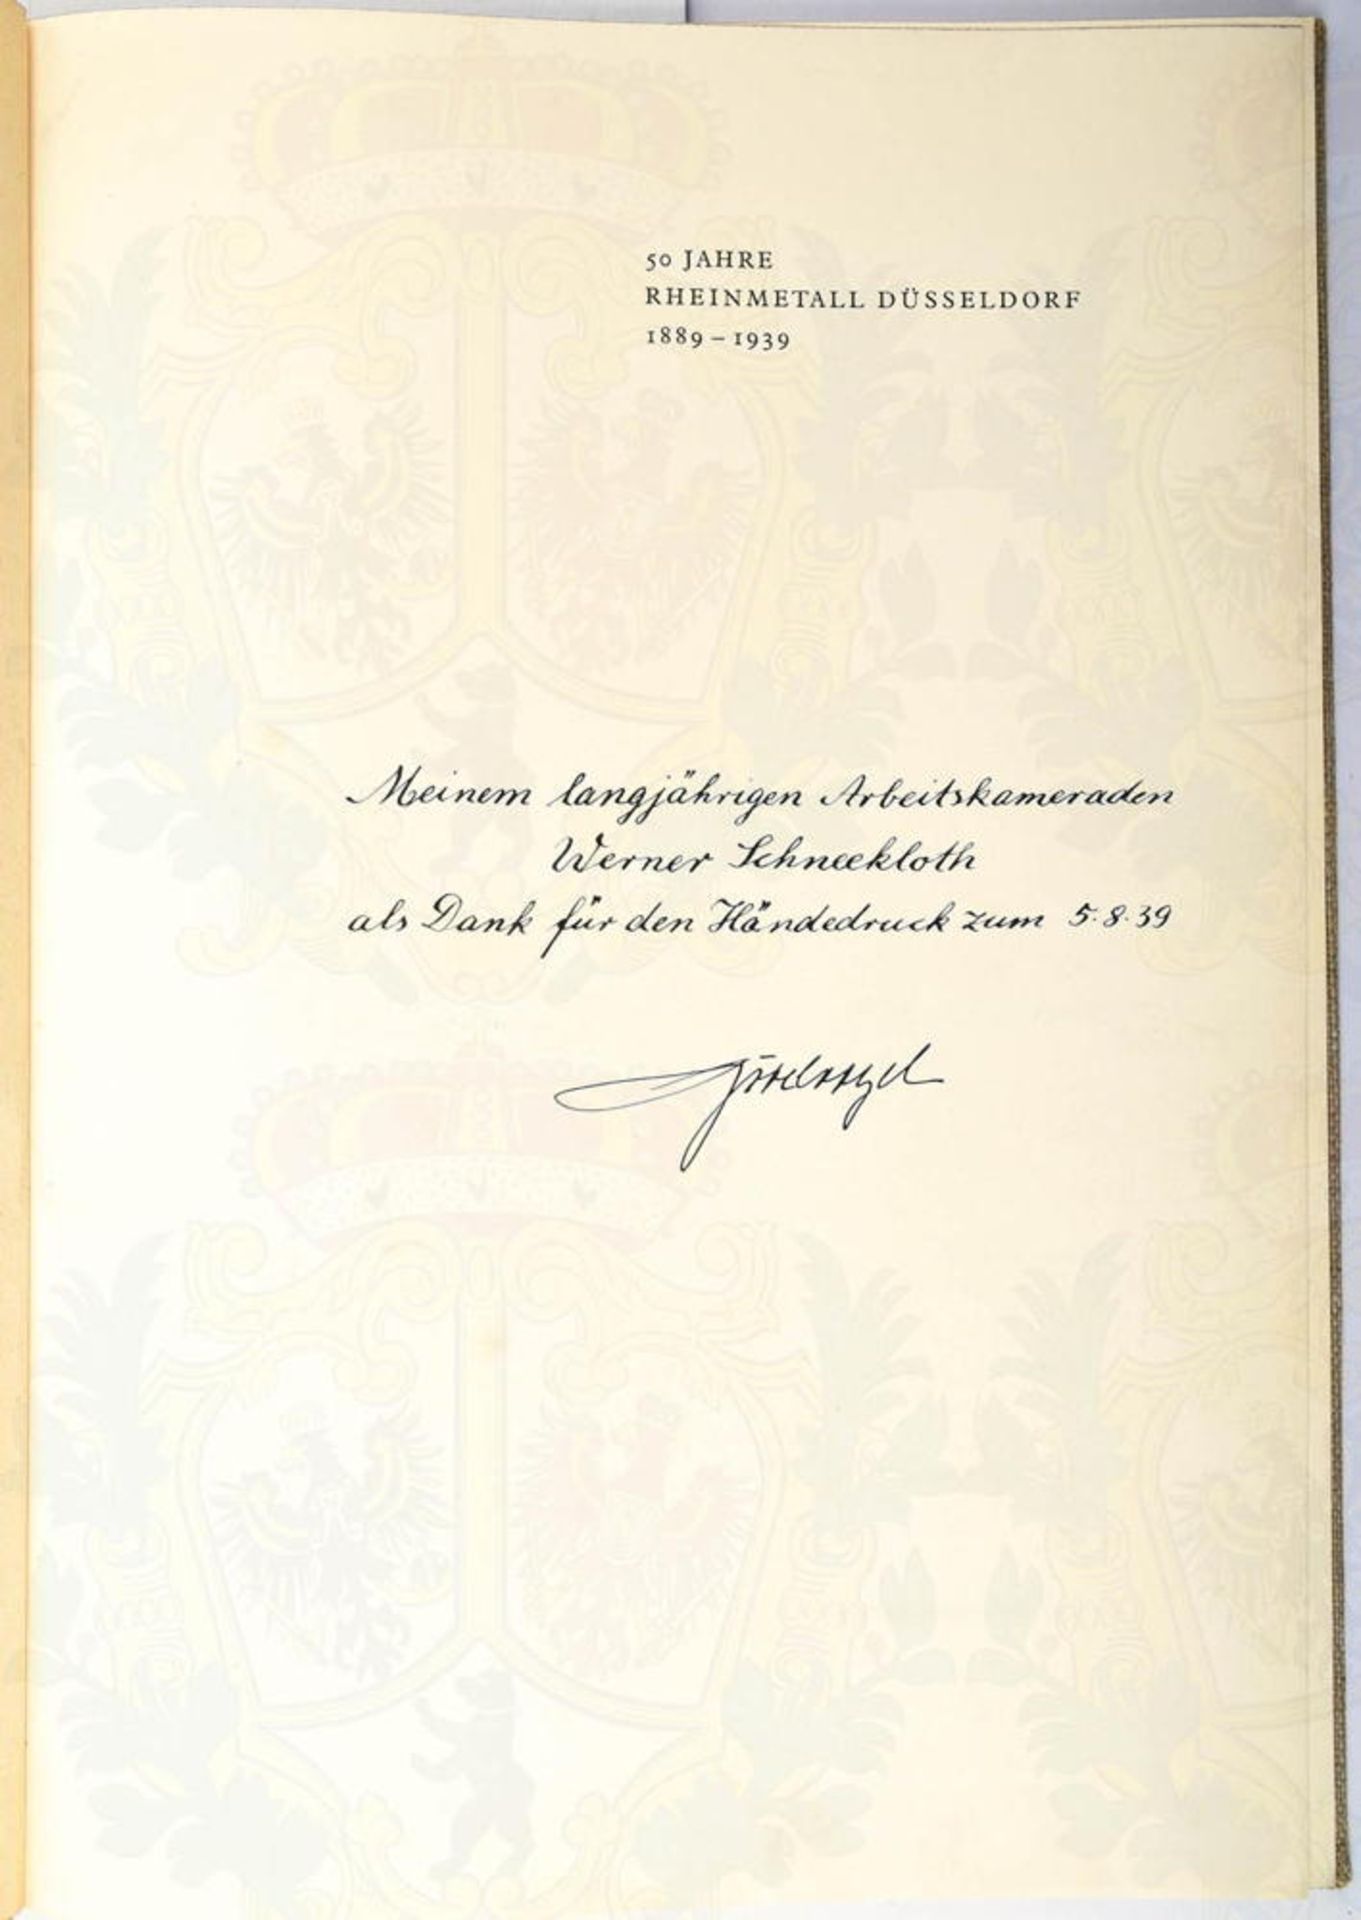 50 JAHRE RHEINMETALL DÜSSELDORF 1889-1939